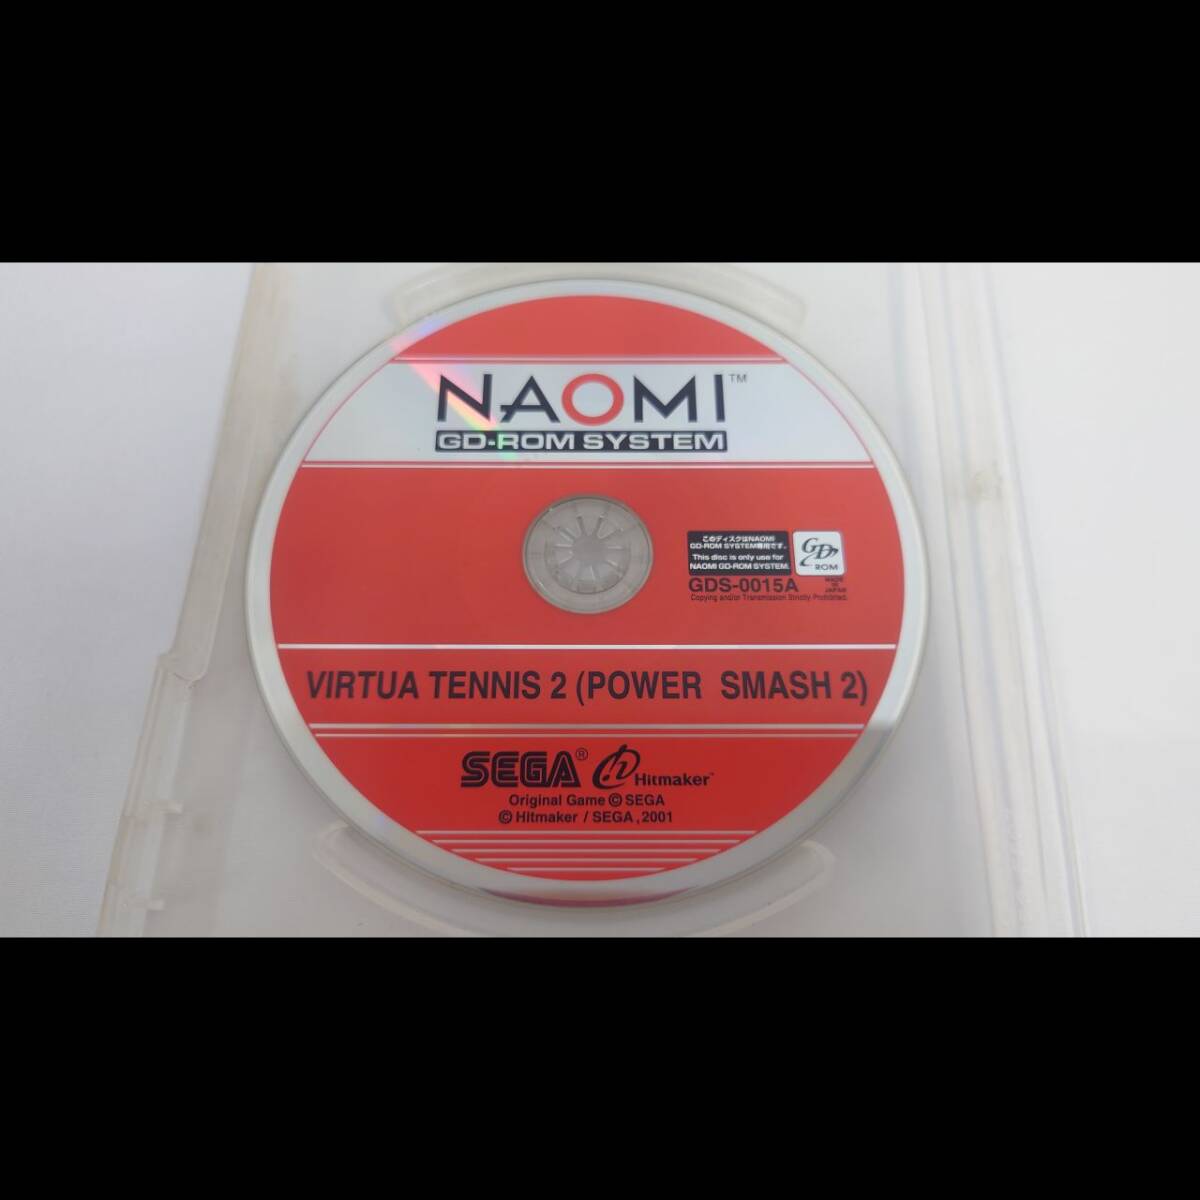  Sega Power Smash 2 NAOMI GD-ROM soft operation verification settled arcade basis board 